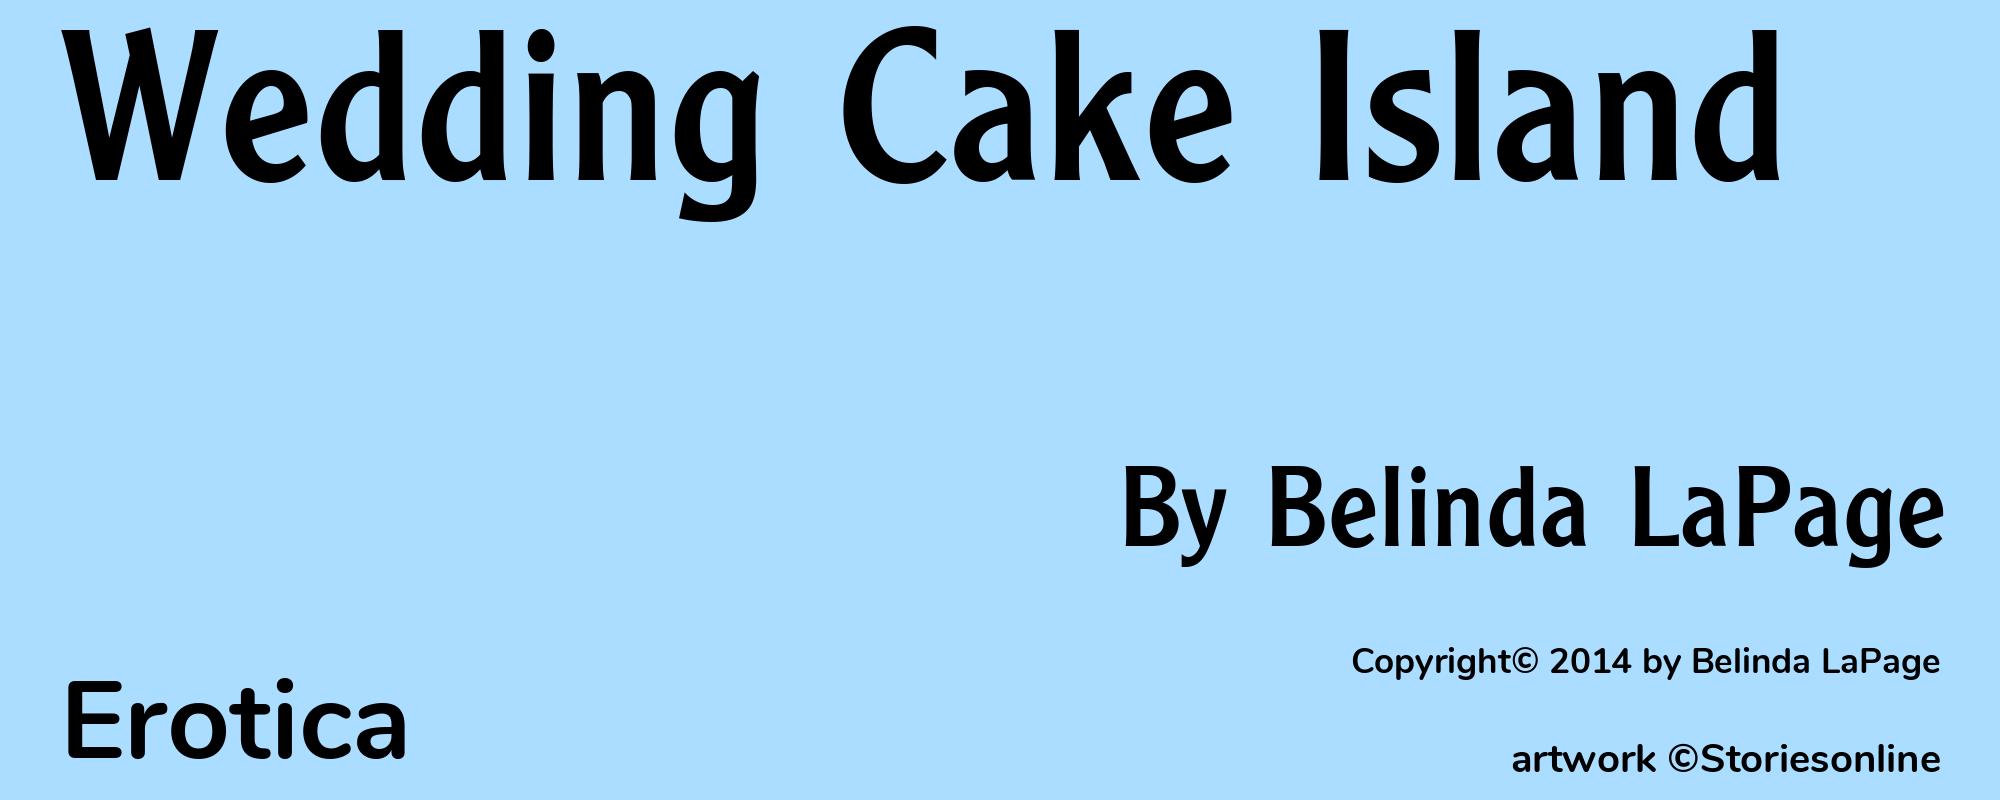 Wedding Cake Island - Cover